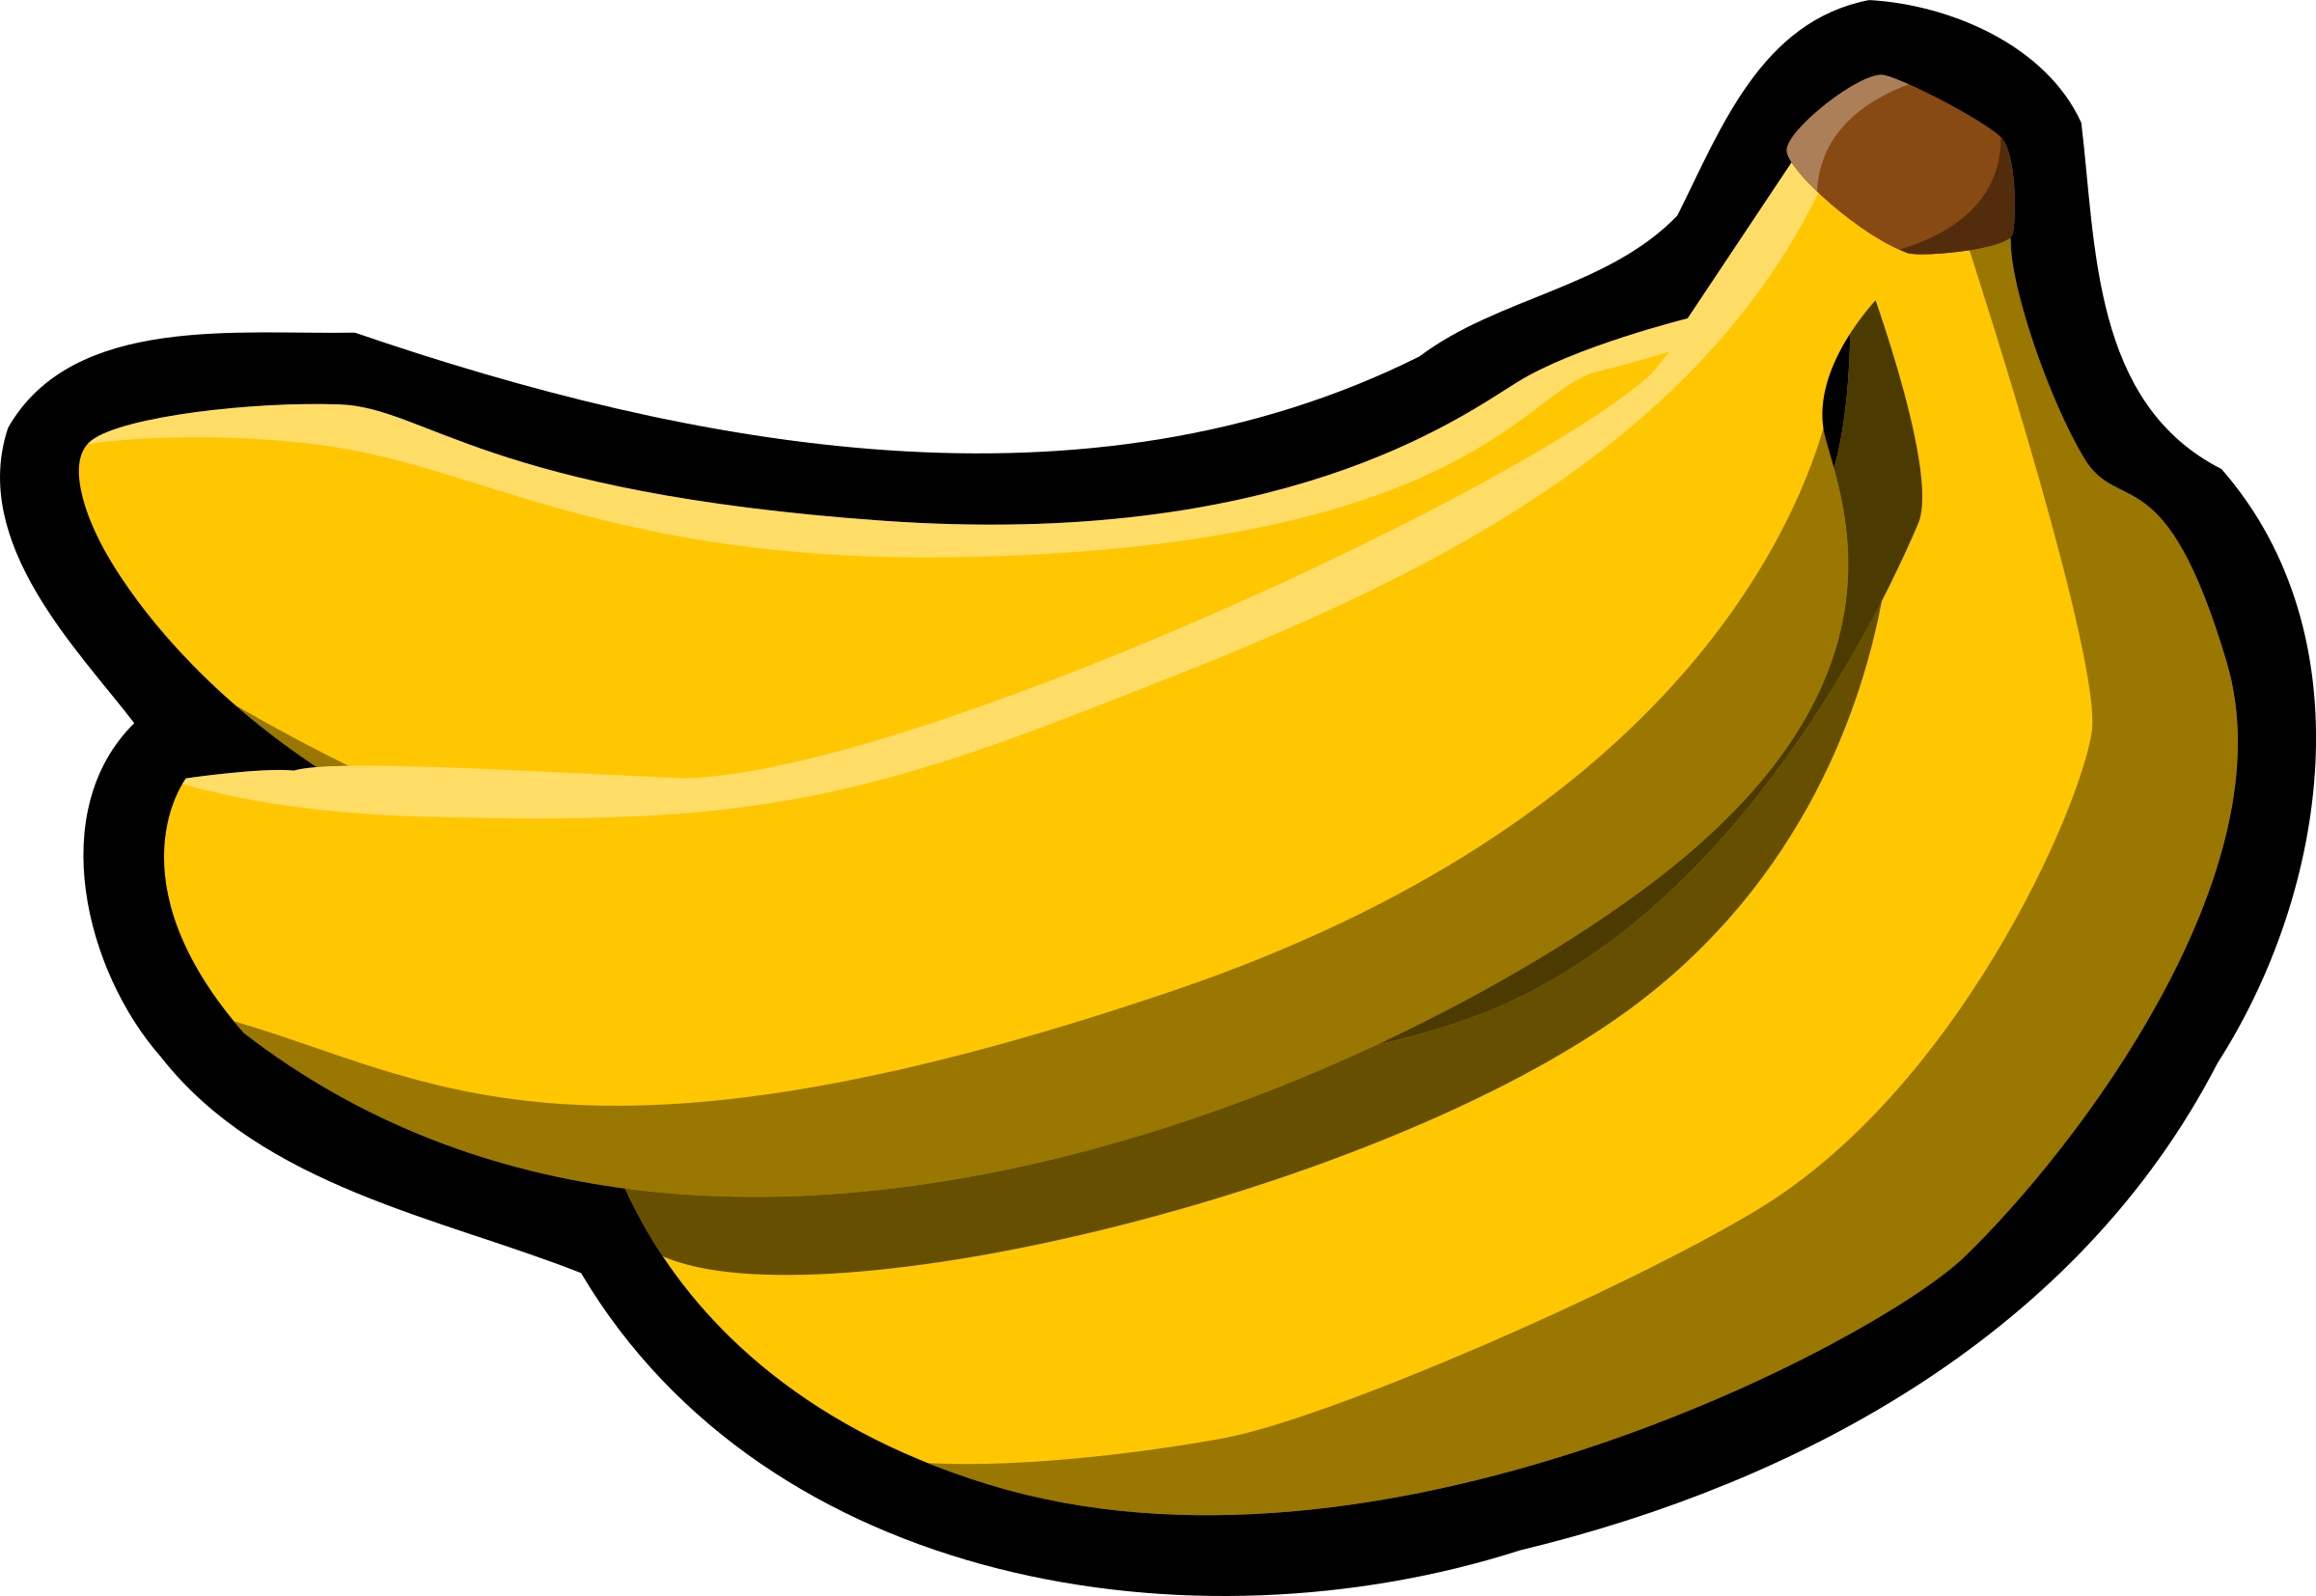 Bananas icon PNG icon